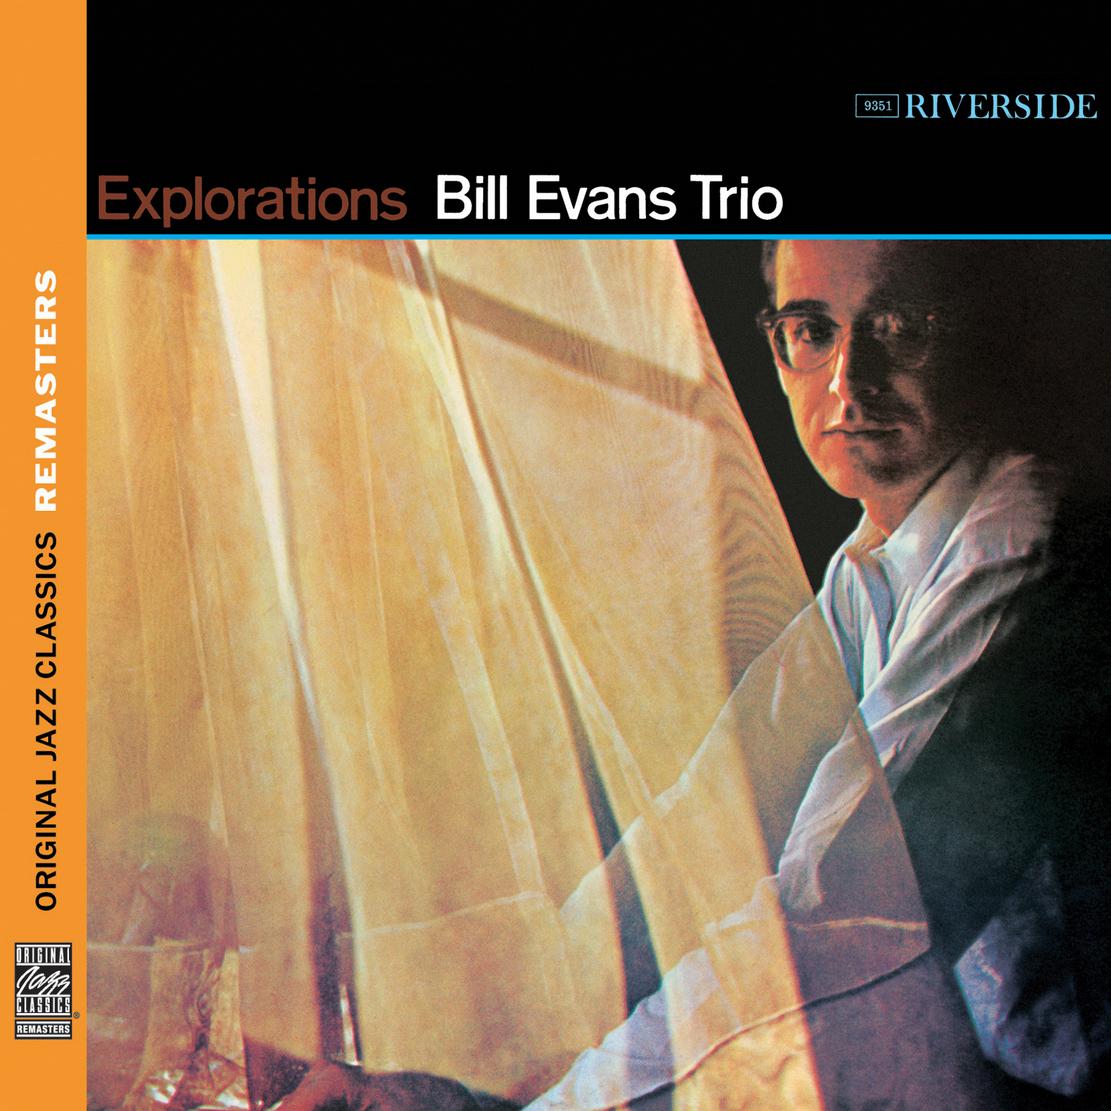 Bill Evans Trio – Explorations (1961/2011) [HDTracks 24bit/88.2kHz]